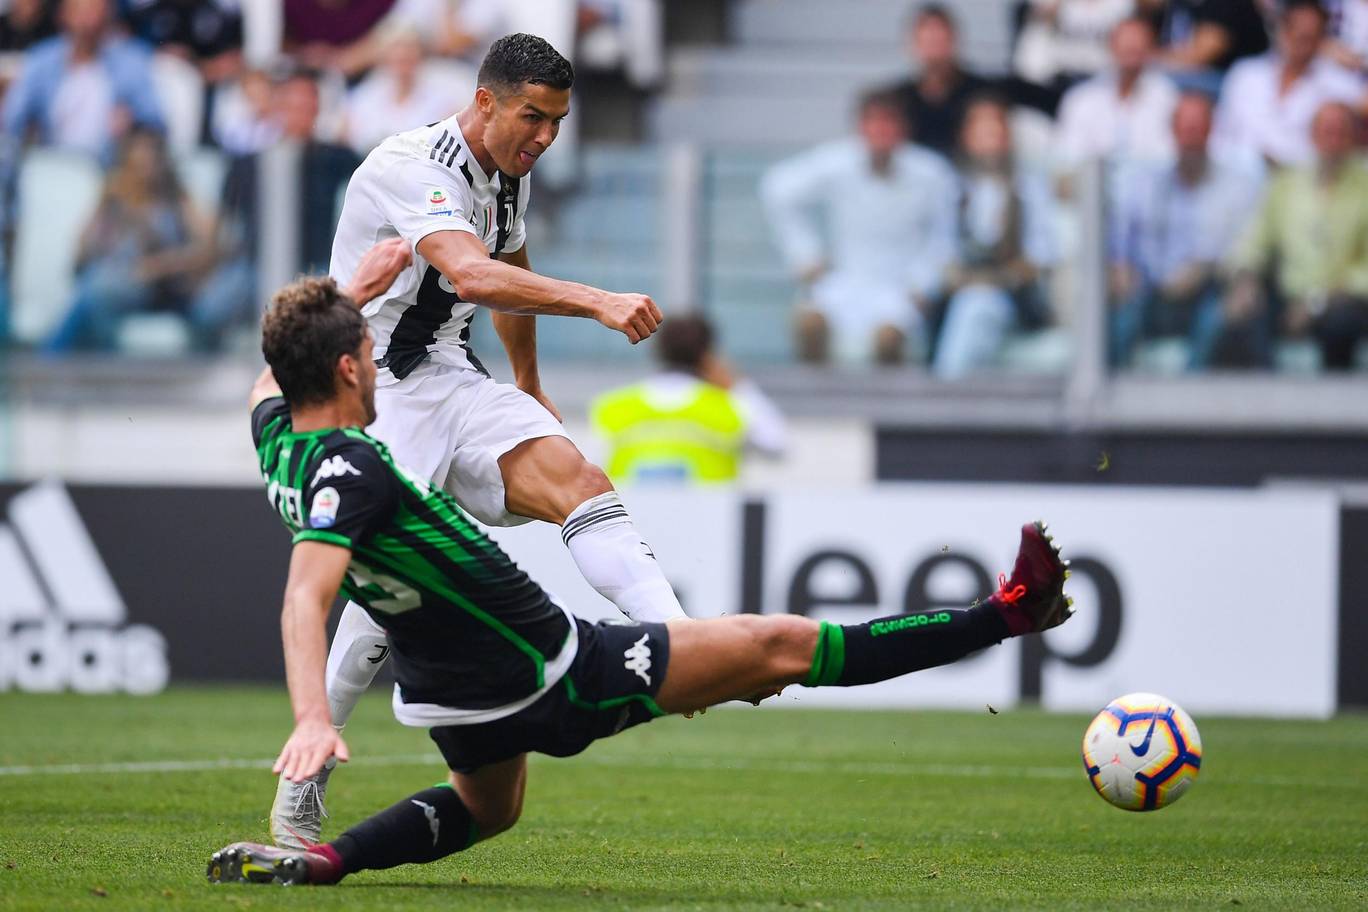 cristiano ronaldo juventus 160918c Cristiano Ronaldo finally opens his goals tally for Juventus with a brace against Sassuolo